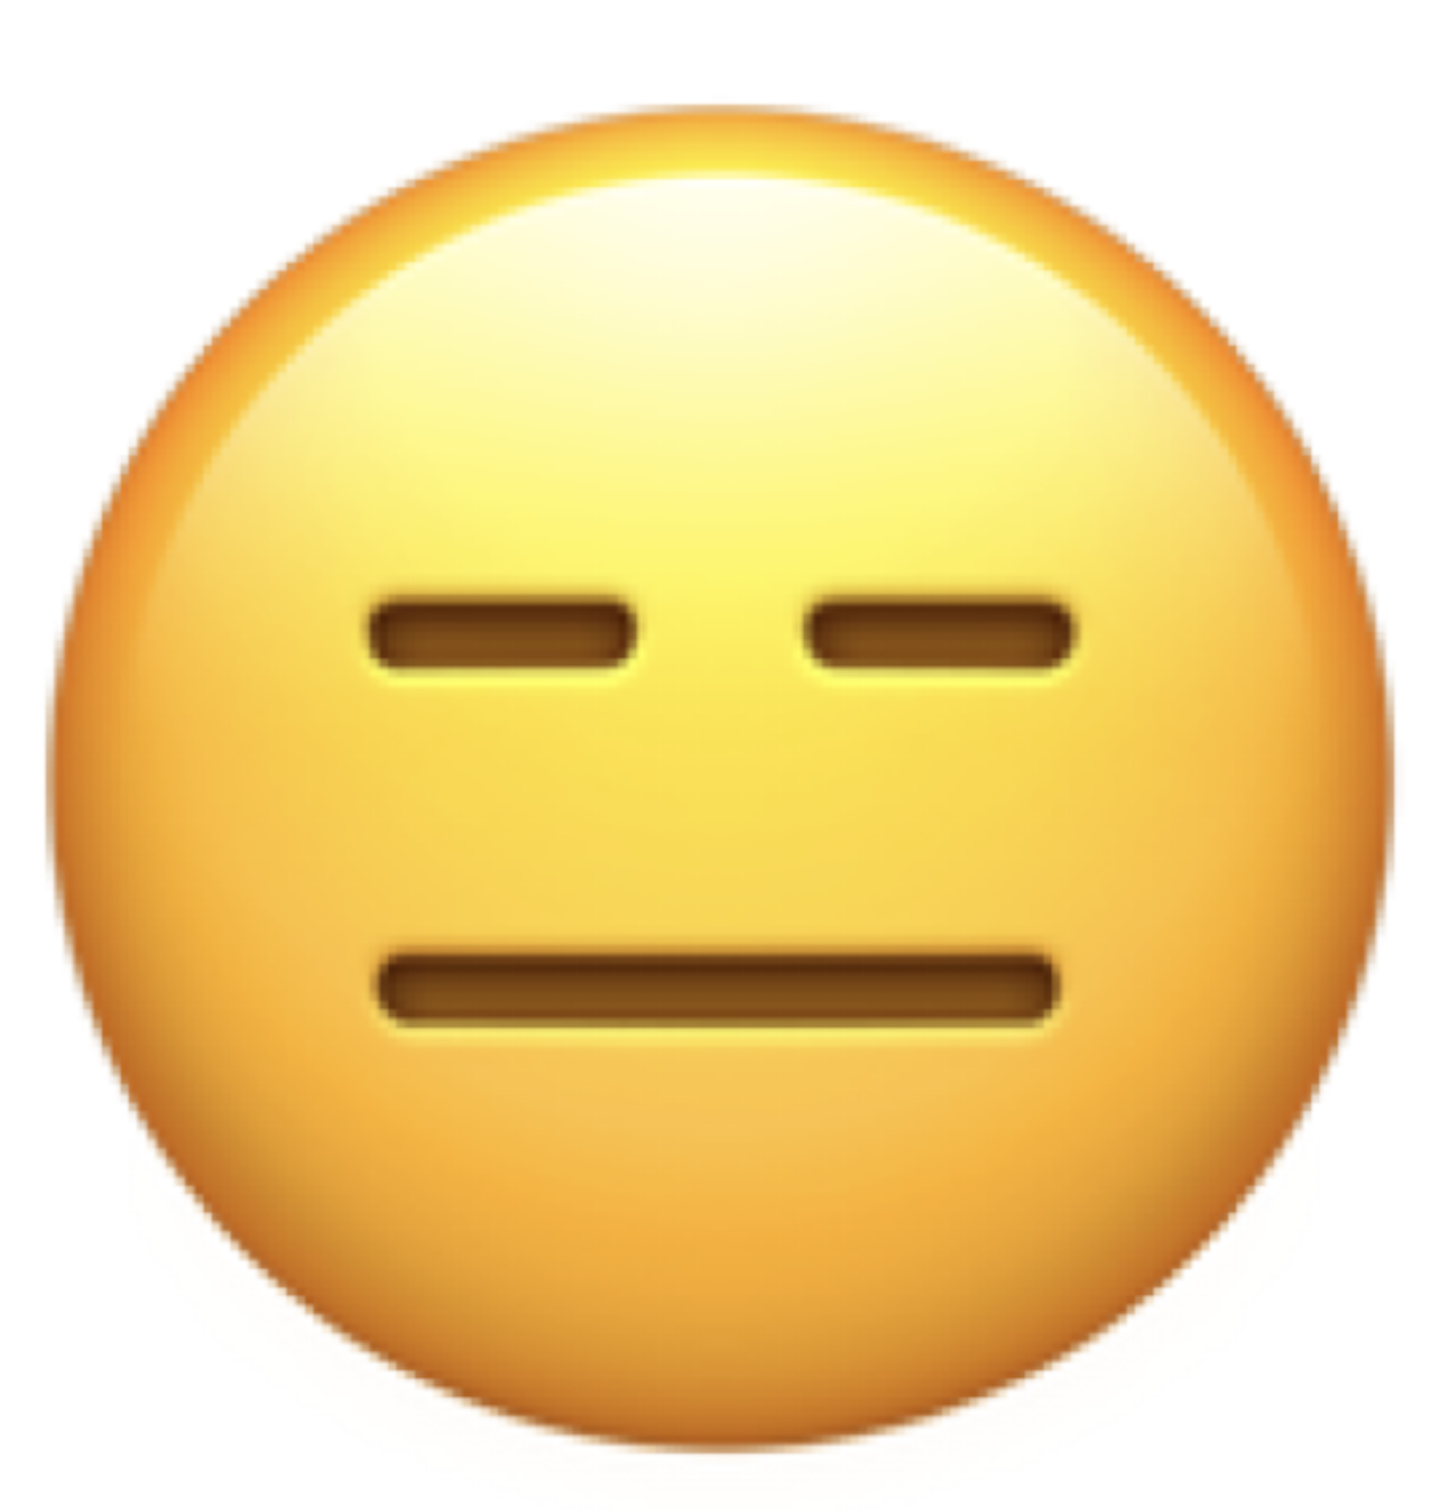 Expressionless face emoji